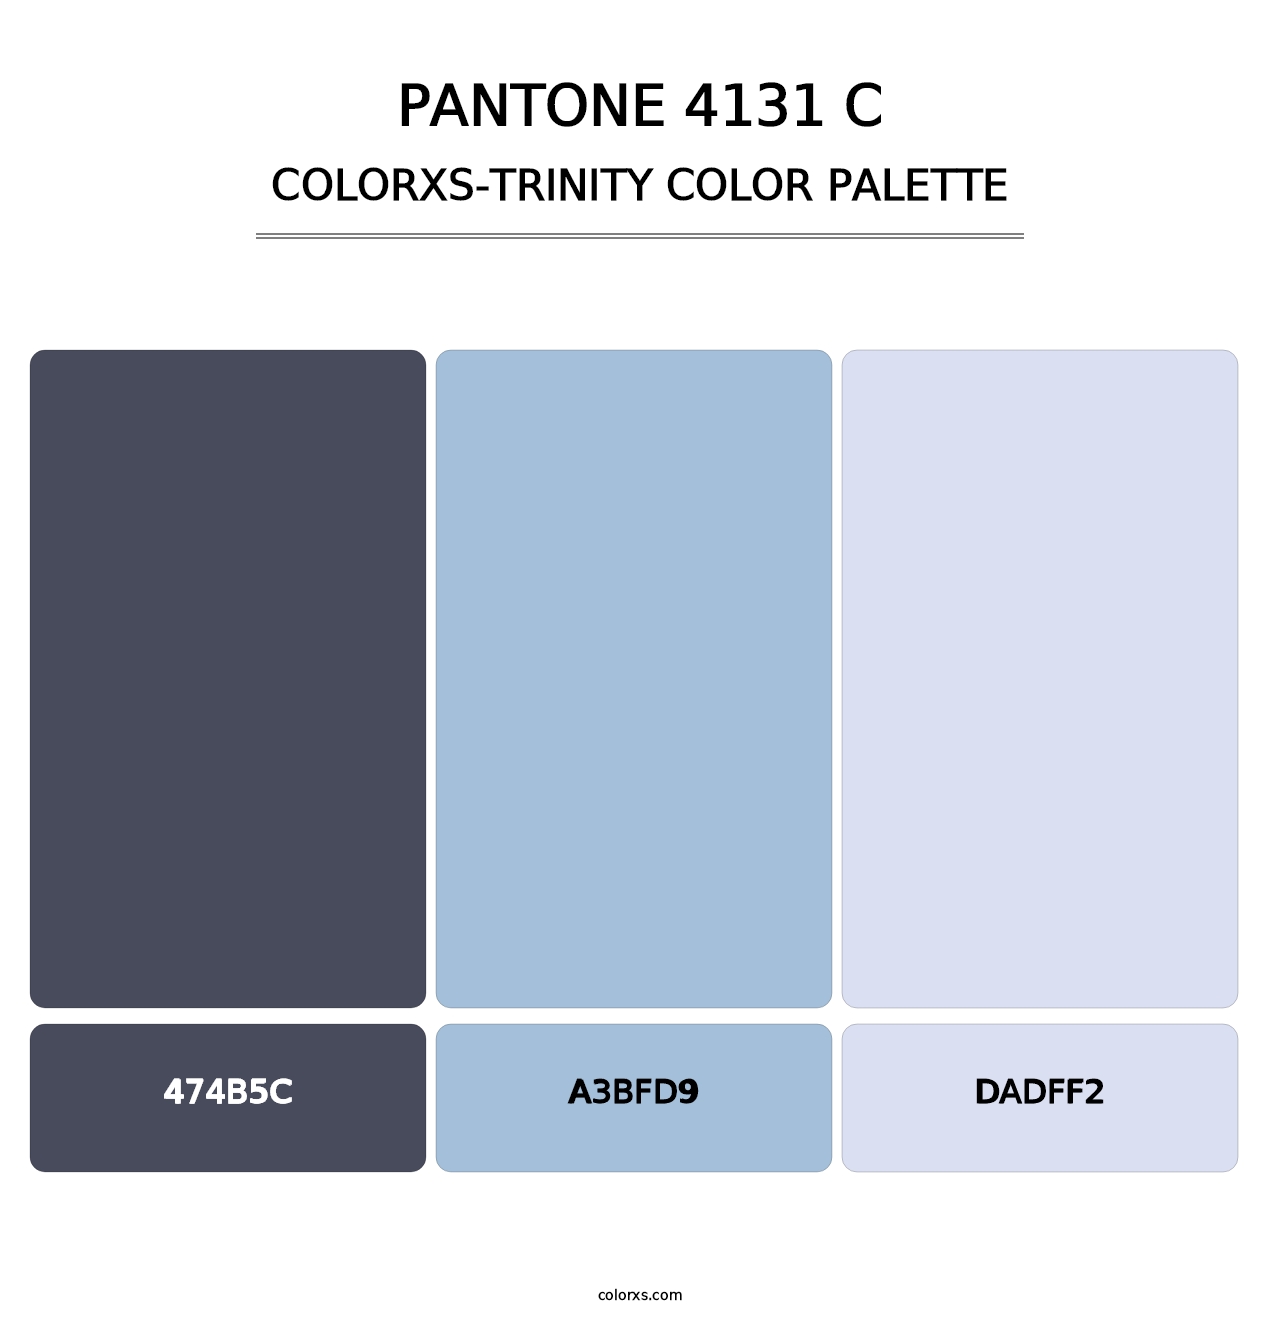 PANTONE 4131 C - Colorxs Trinity Palette